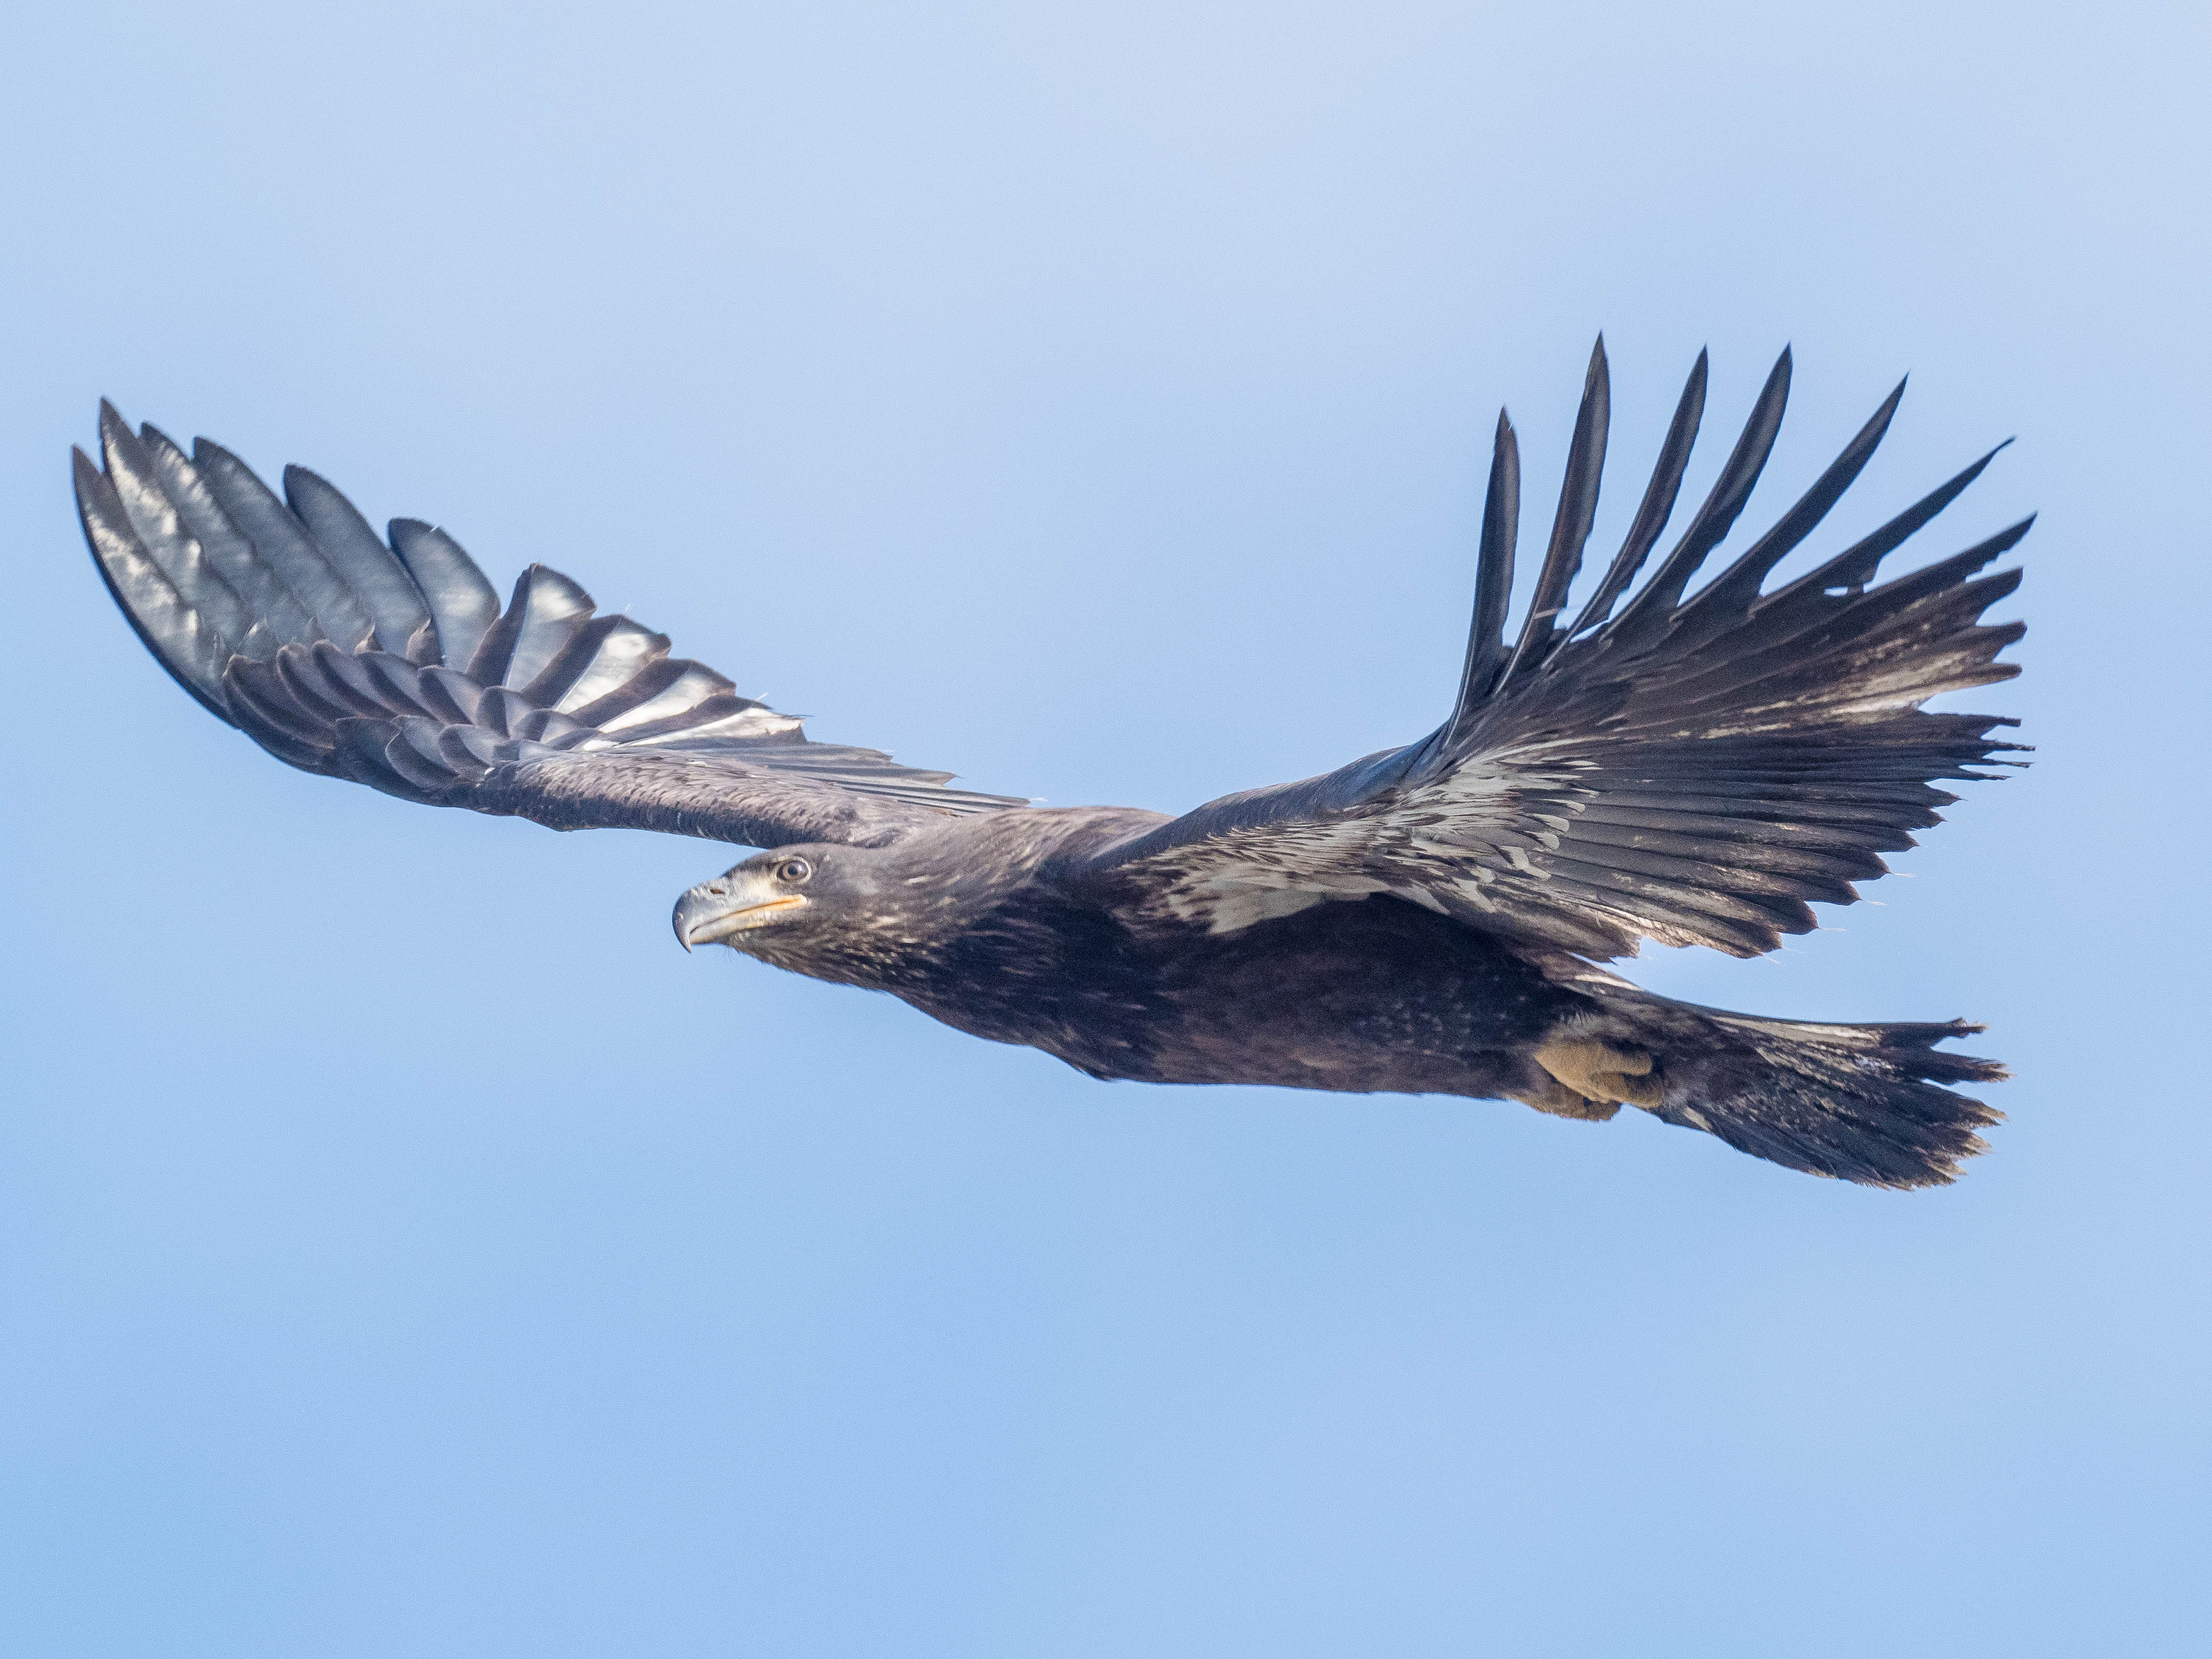 Curtner's juvenile eagle takes flight